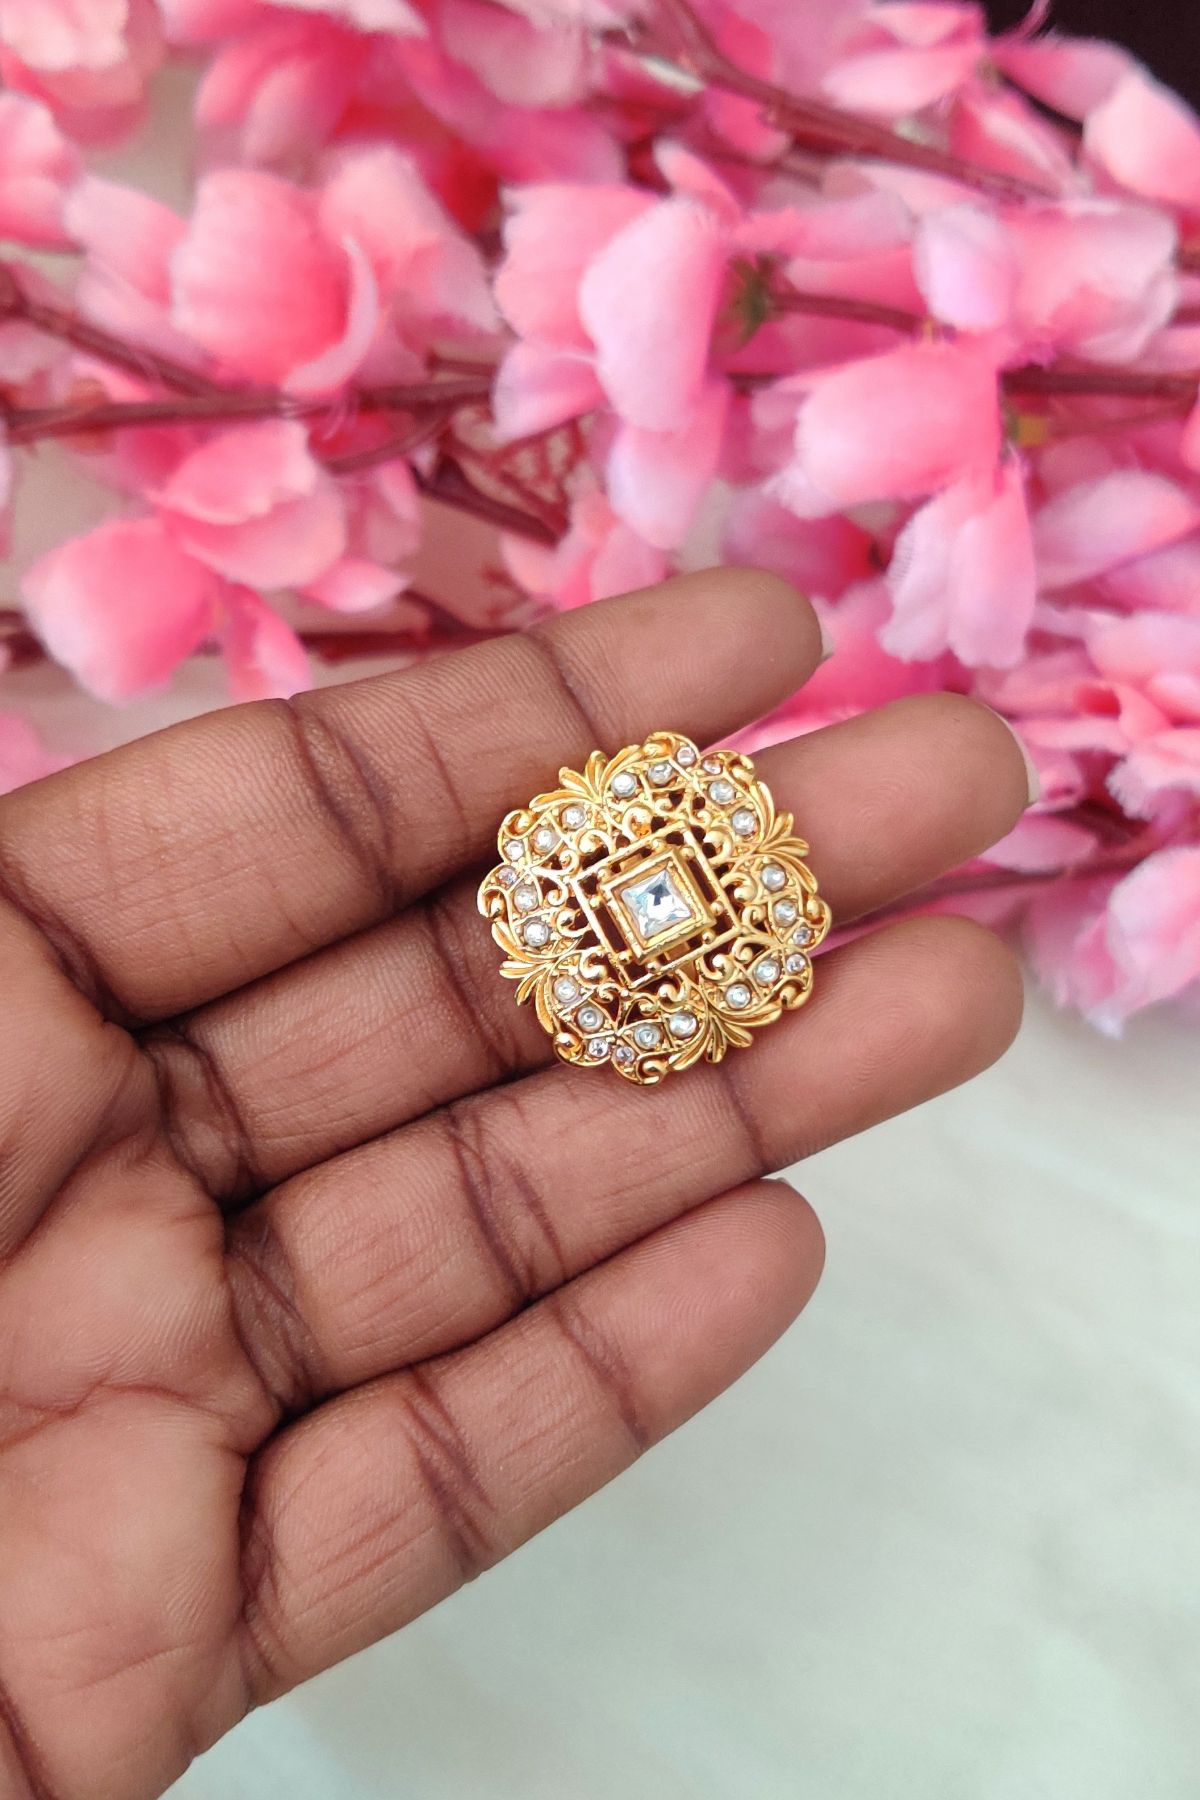 Rajputi jewellery ring | Diamond jewelry designs, Hand jewelry, Gold  jewelry fashion